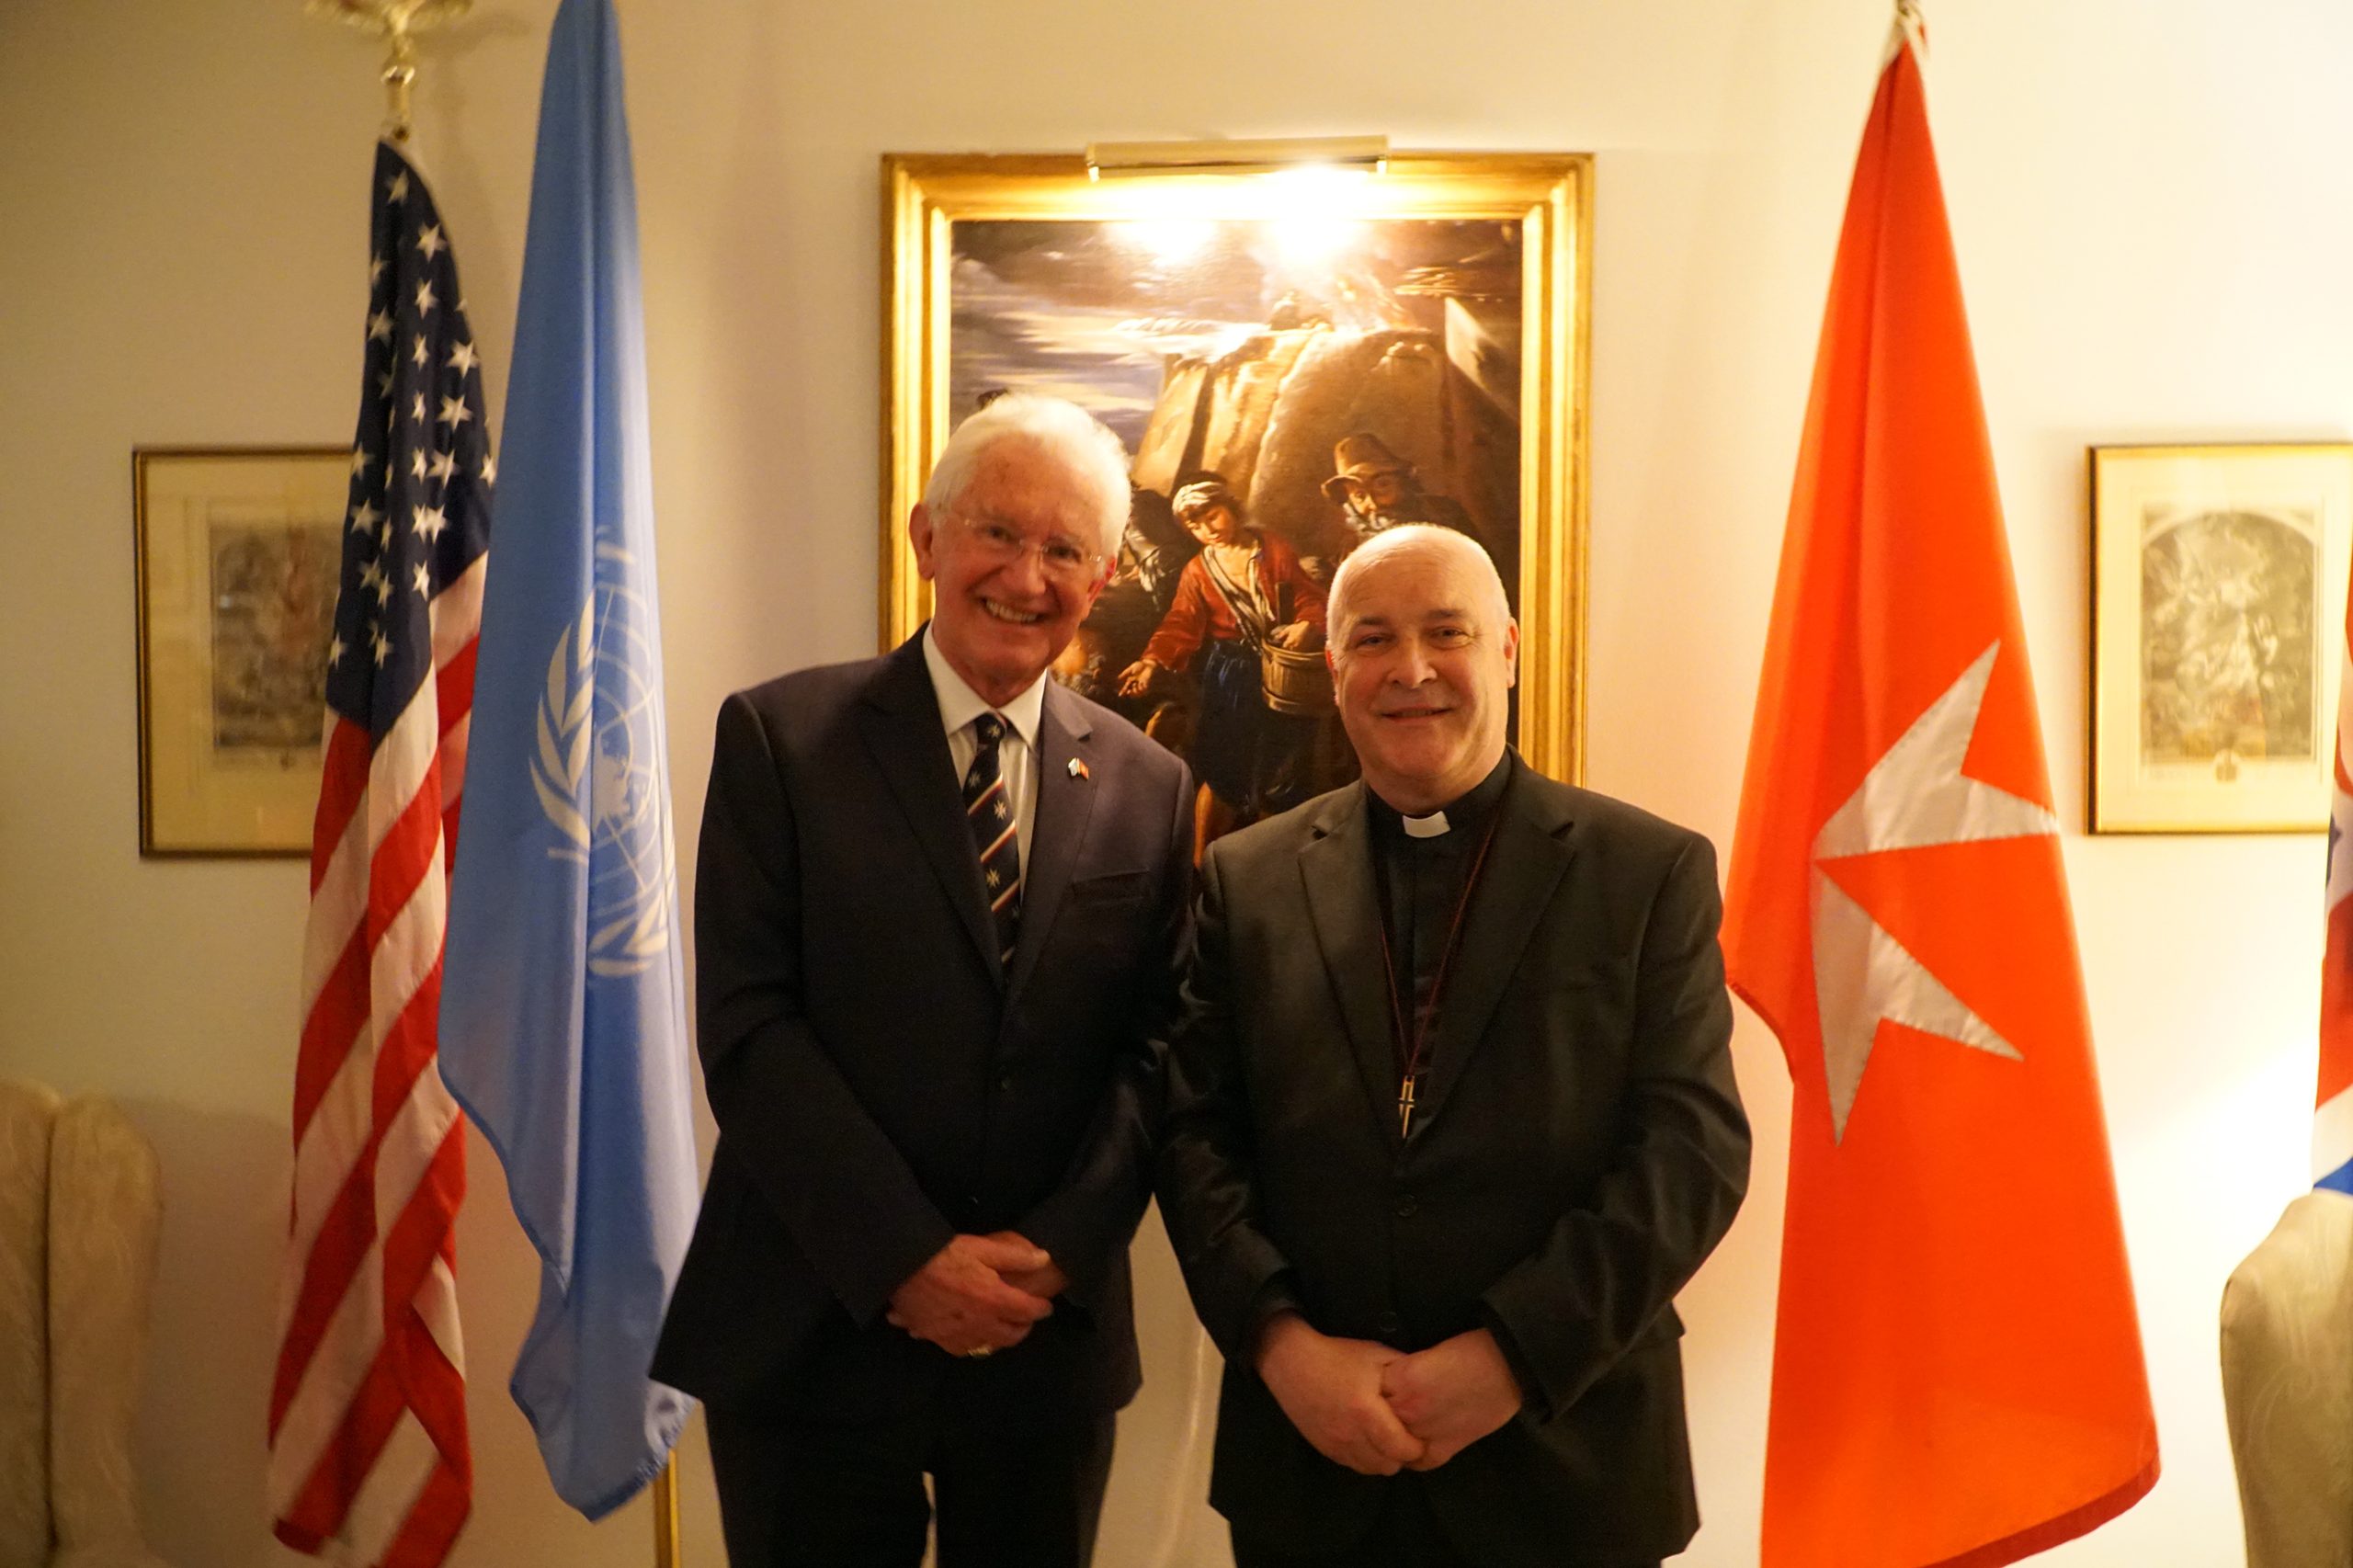 Promoting Unity: Sovereign Order of Malta Hosts Reception Honoring Archbishop of York